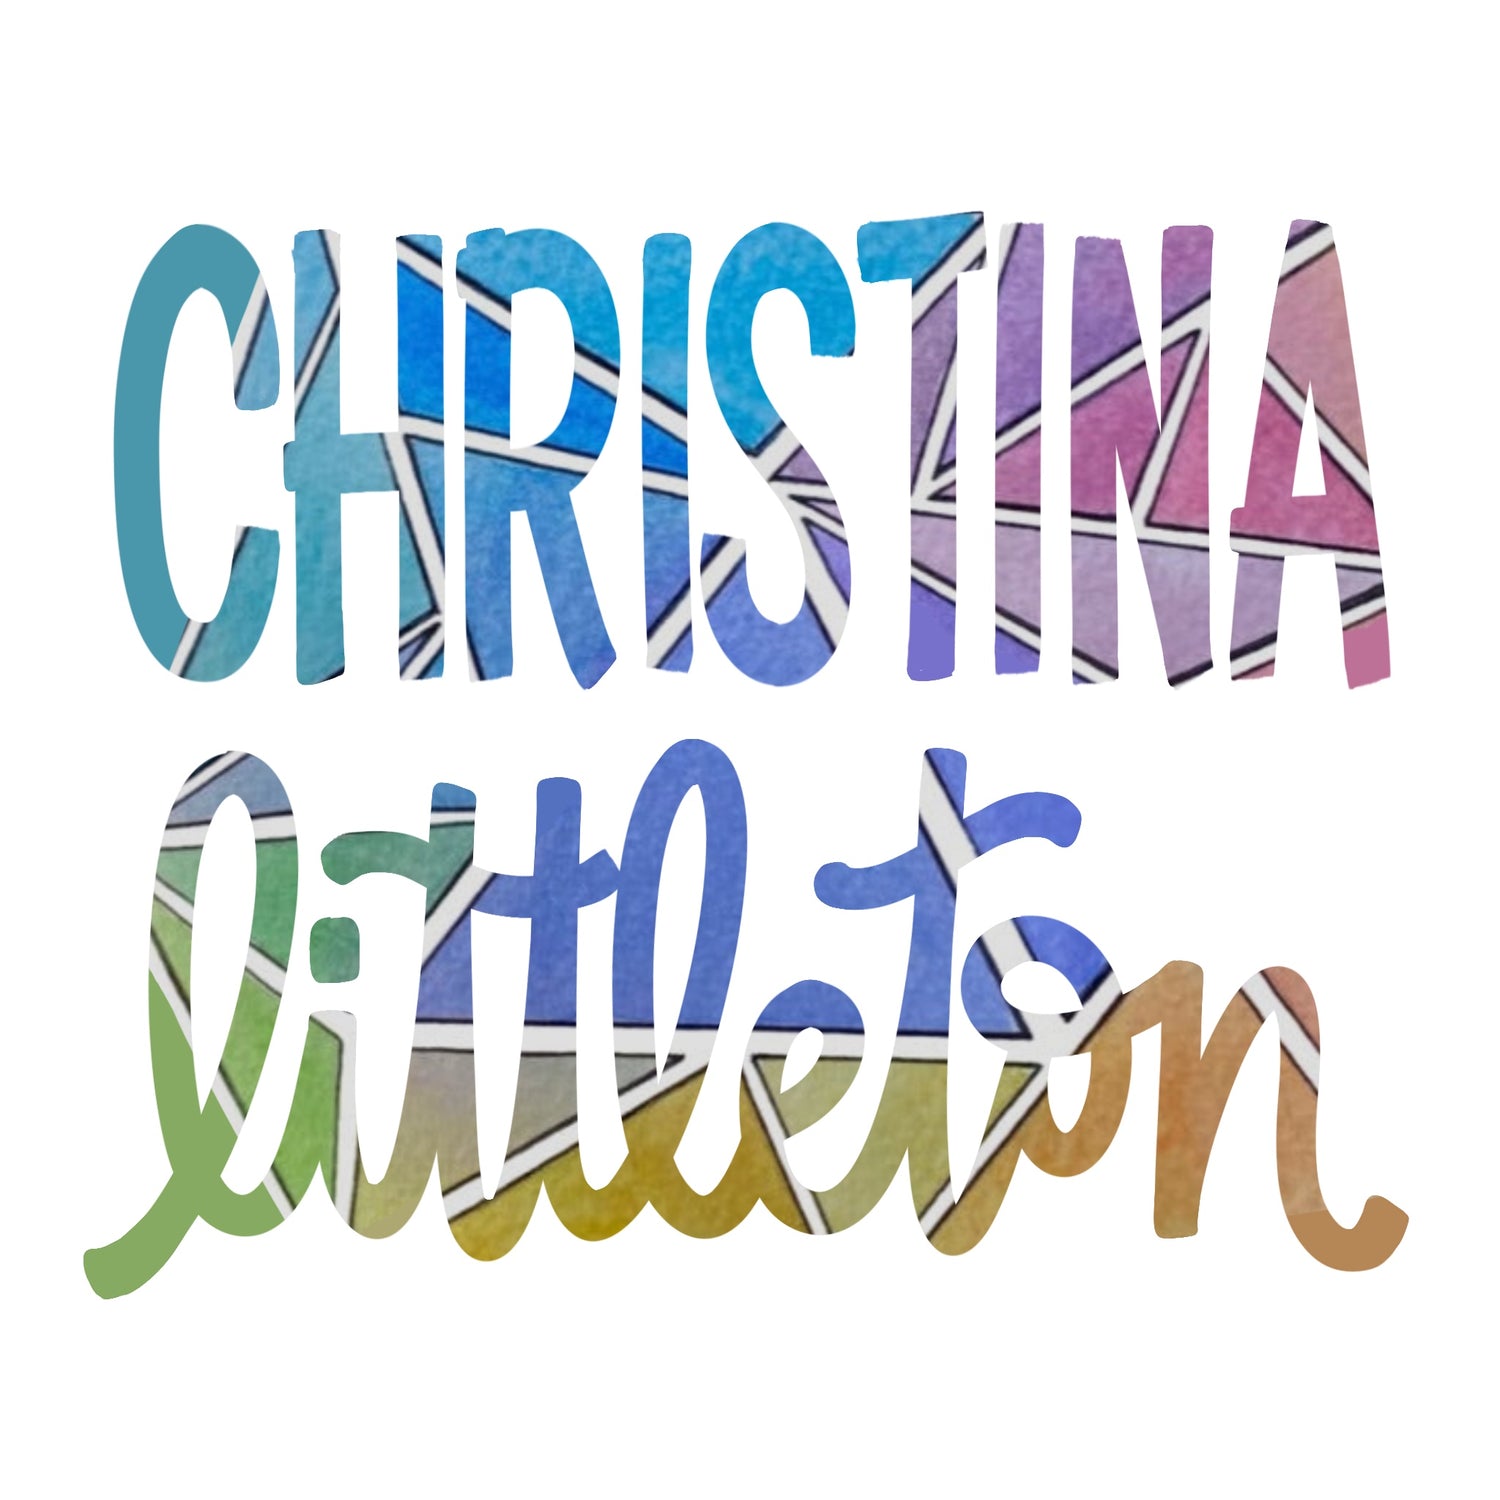 Christina Littleton